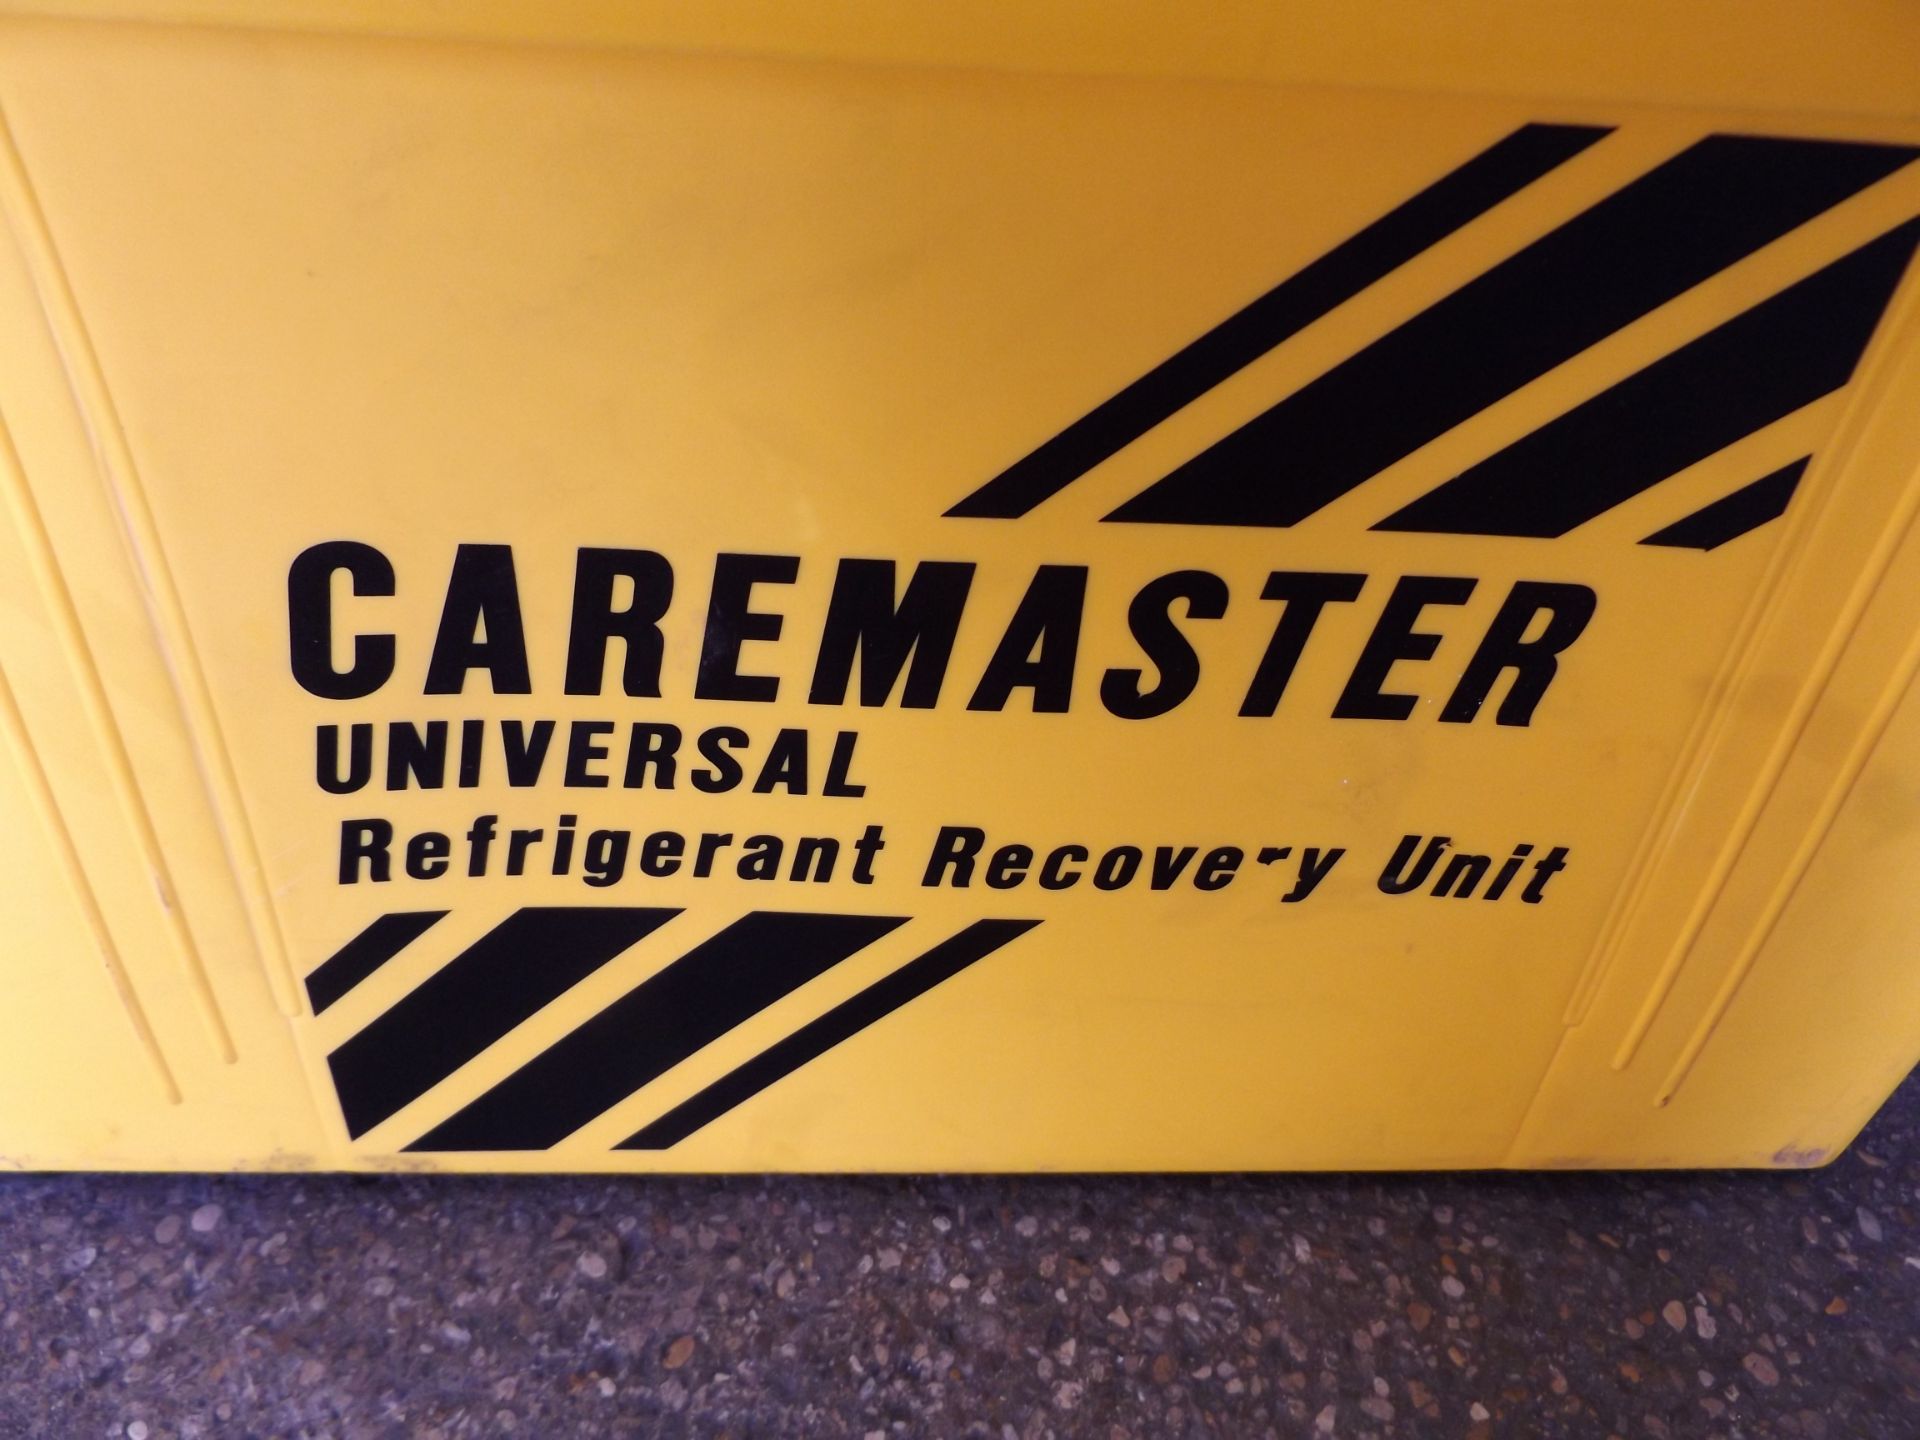 Caremaster Universal Refrigerant Recovery Unit - Image 4 of 4